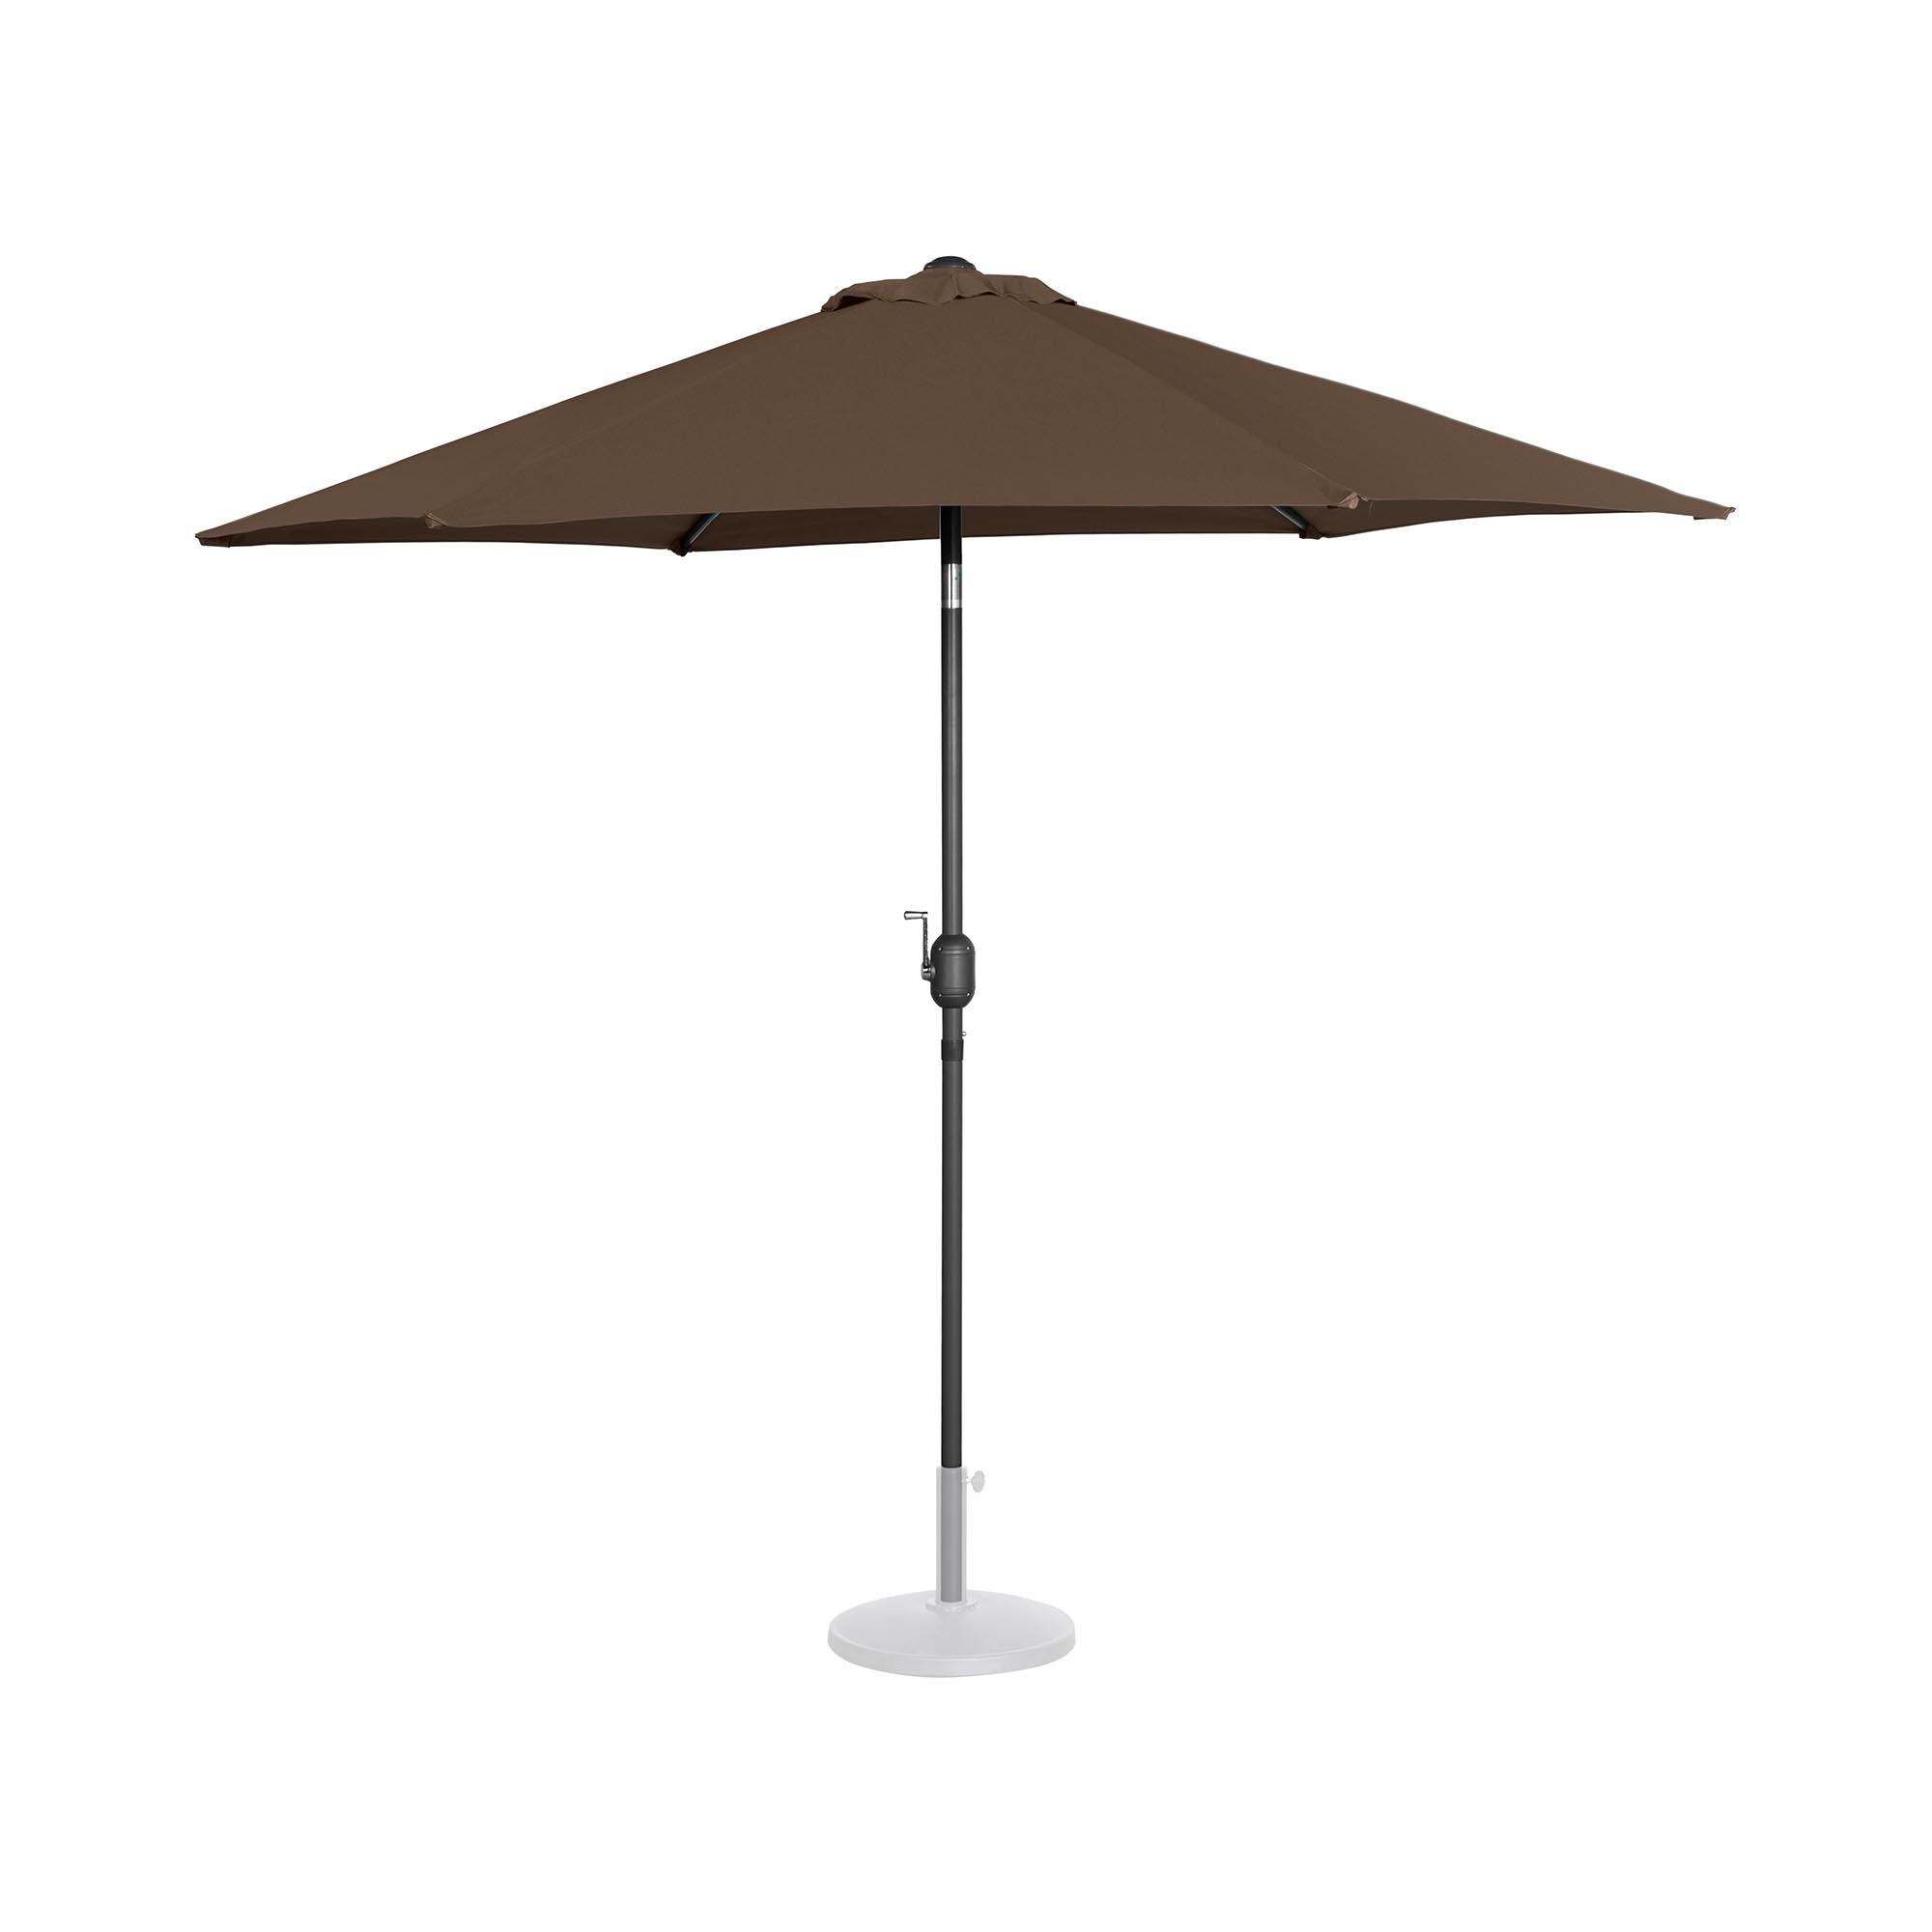 Uniprodo Parasol de terrasse - Marron - Hexagonal - Ø 270 cm - Inclinable UNI_UMBRELLA_R270BR